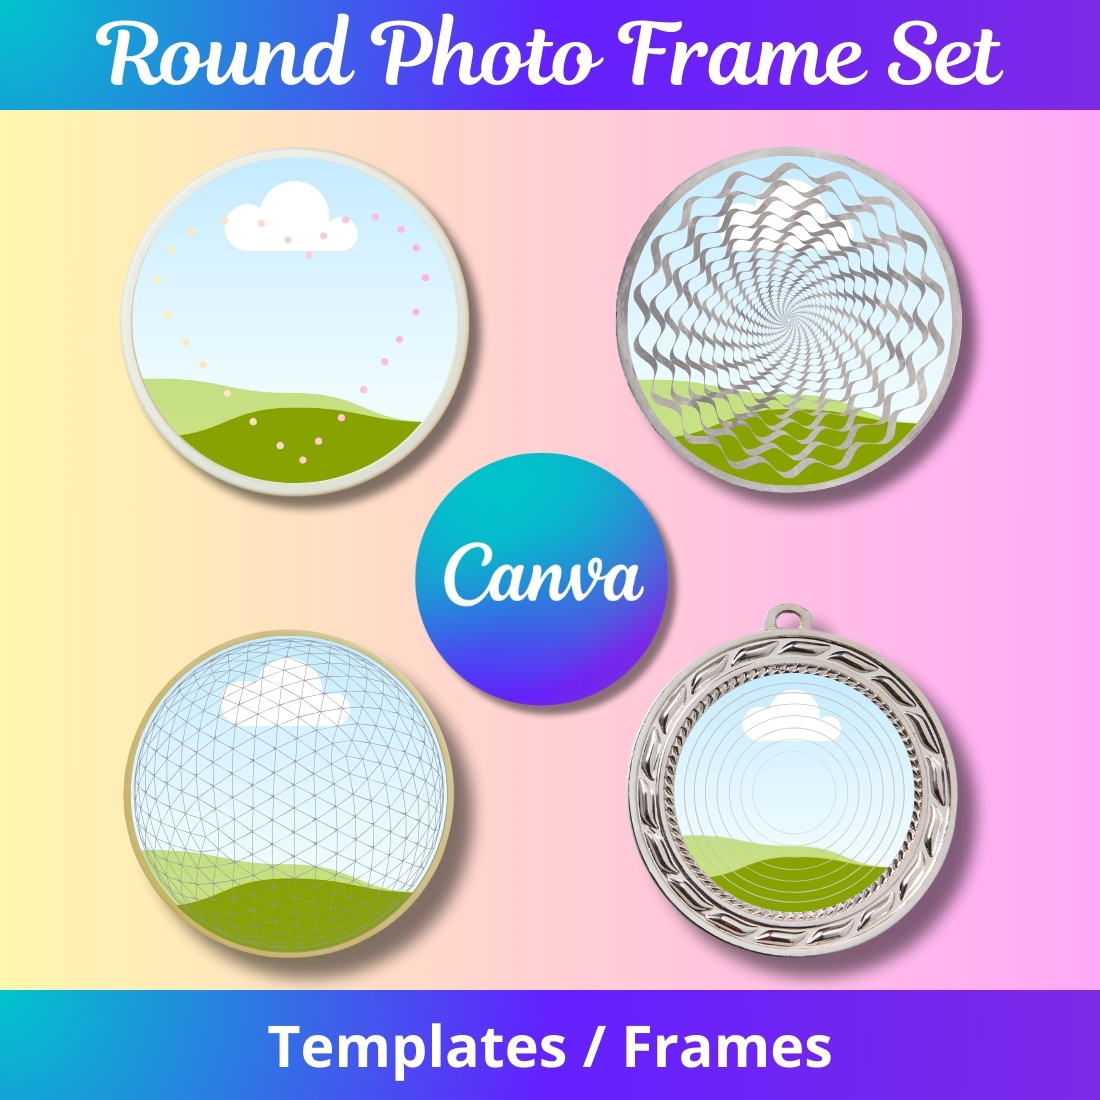 Round Photo Frame Set | Templates / Frames | Canva preview image.